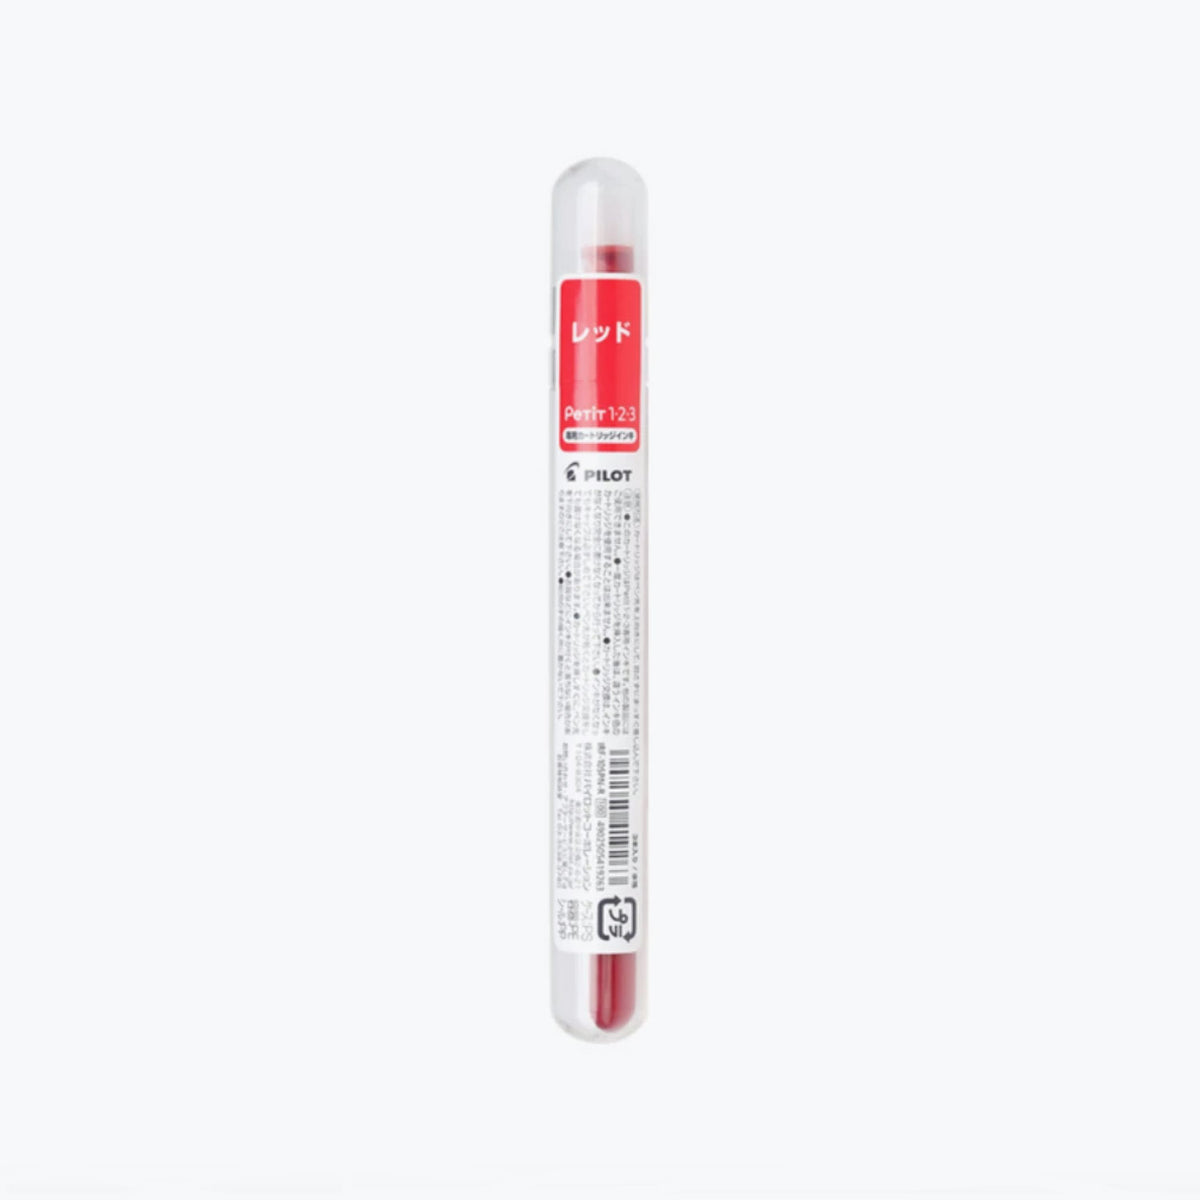 Pilot - Fountain Pen Refill - Petit - Red <Outgoing>